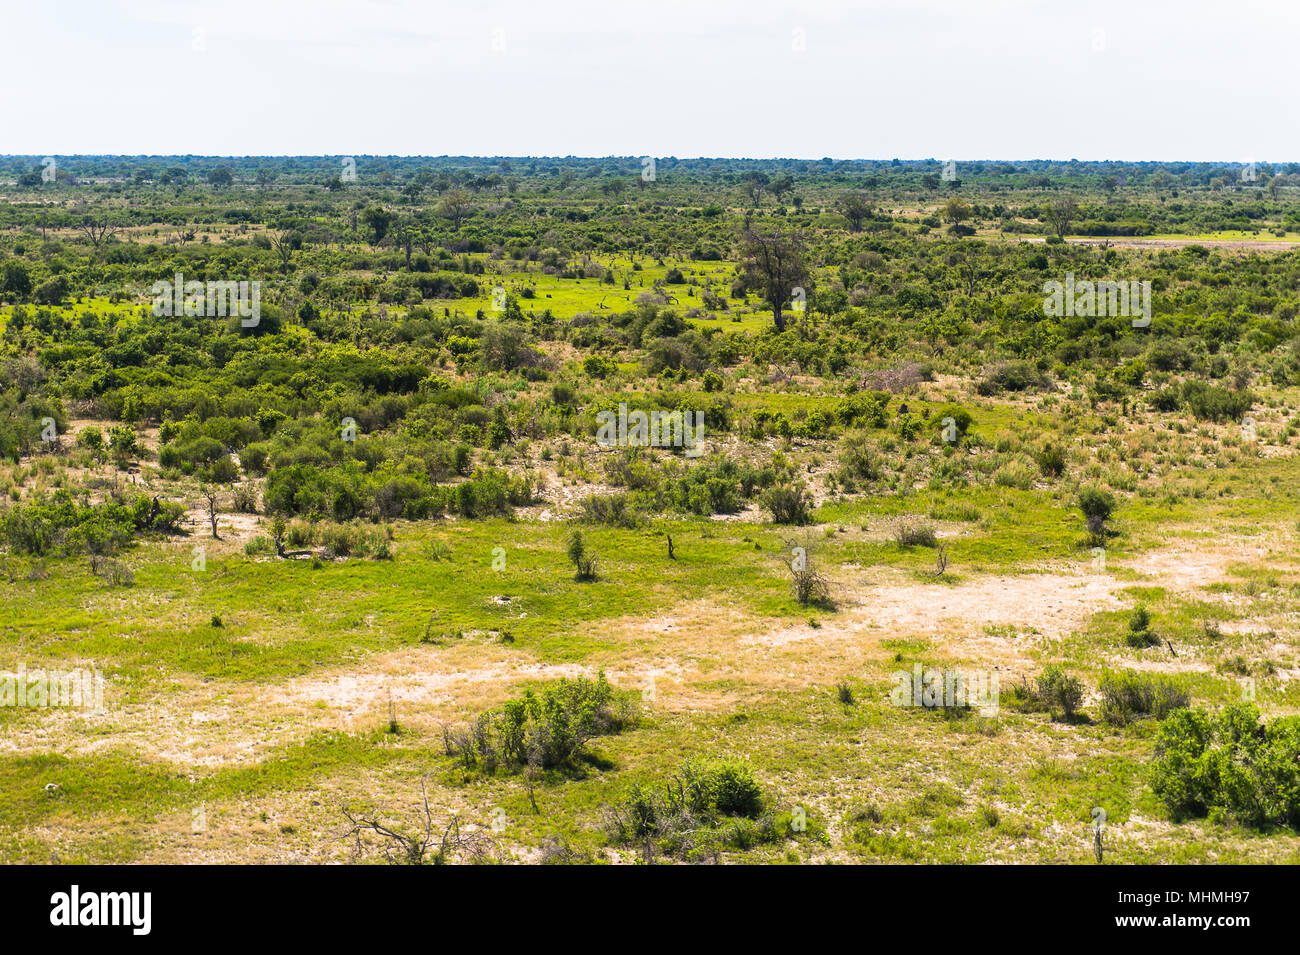 Aerial view of nature of Botswana, Africa Stock Photo - Alamy